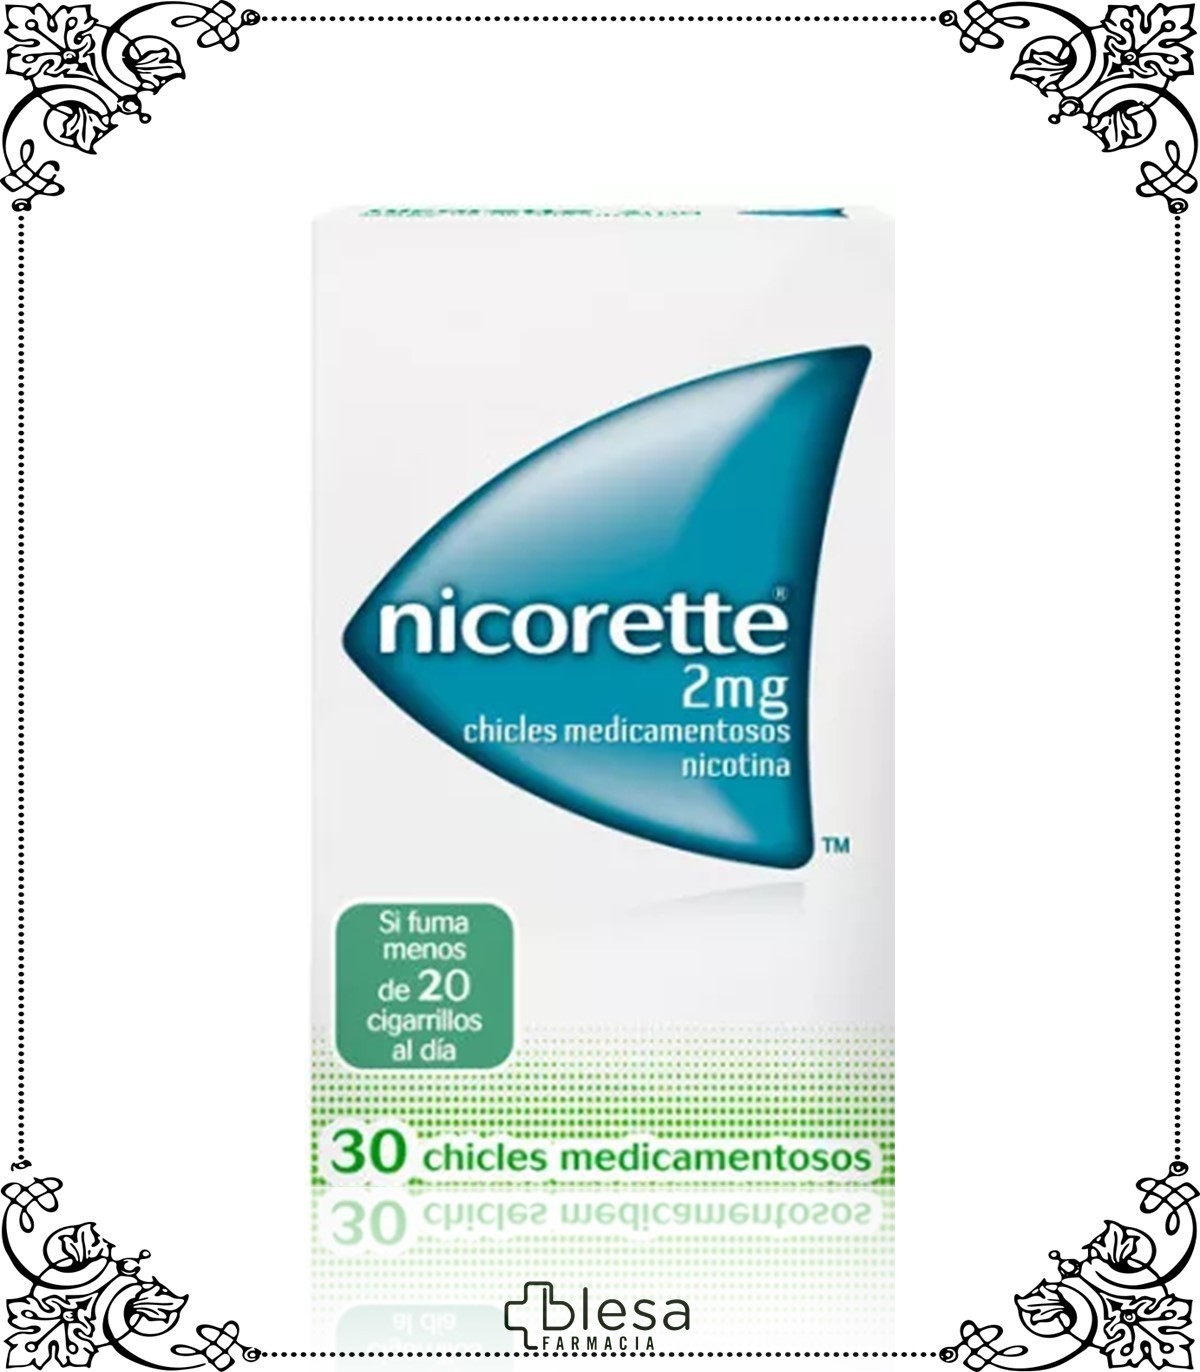 Nicorette 4mg 30 chicles medicamentosos